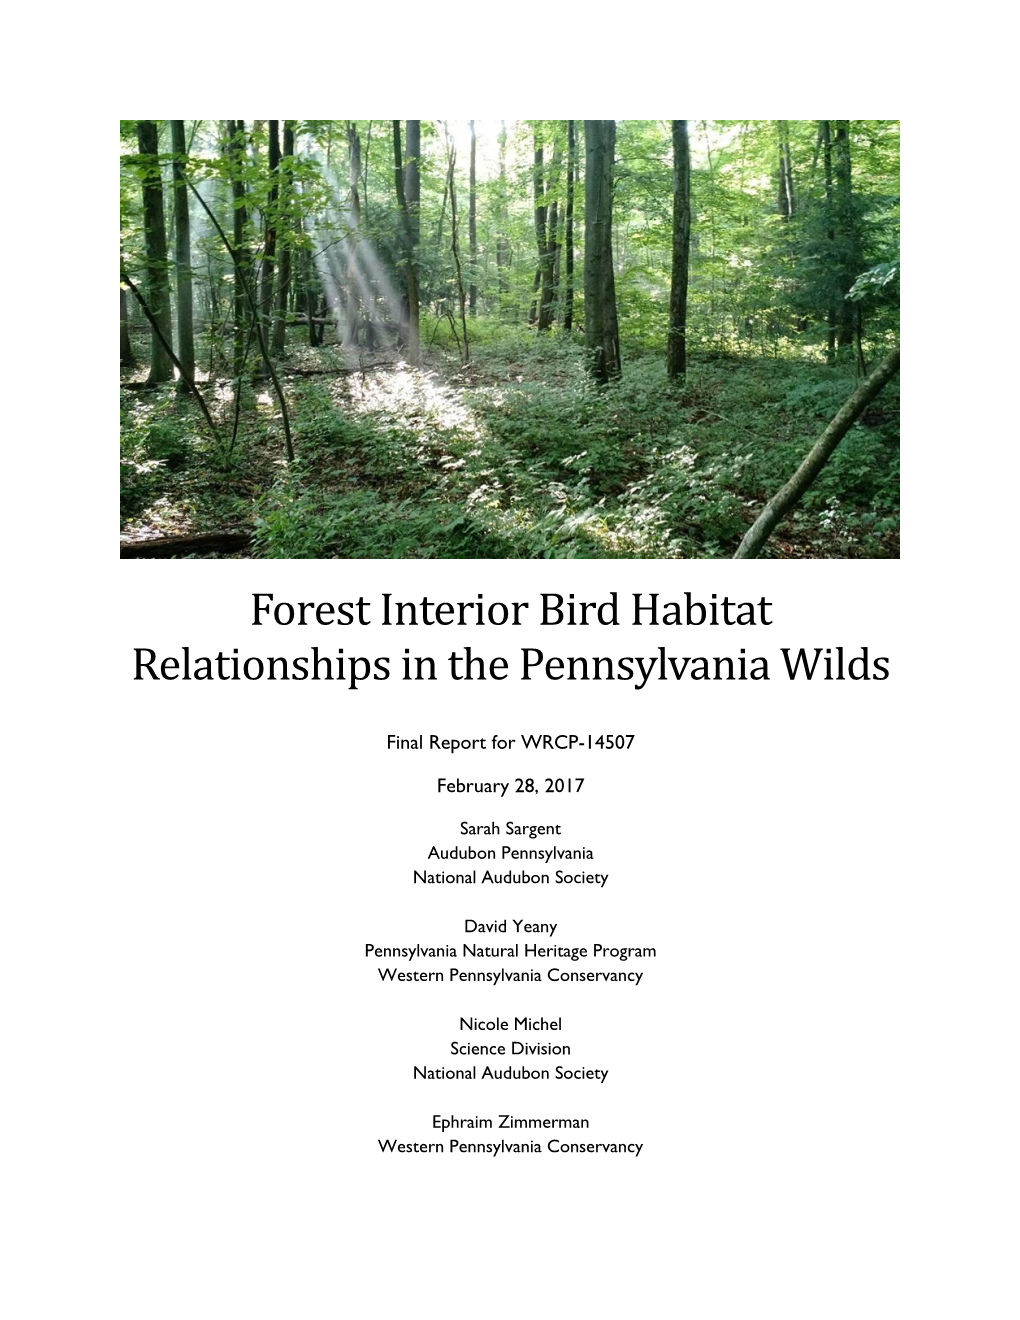 Forest Interior Bird Habitat Relationships in the Pennsylvania Wilds